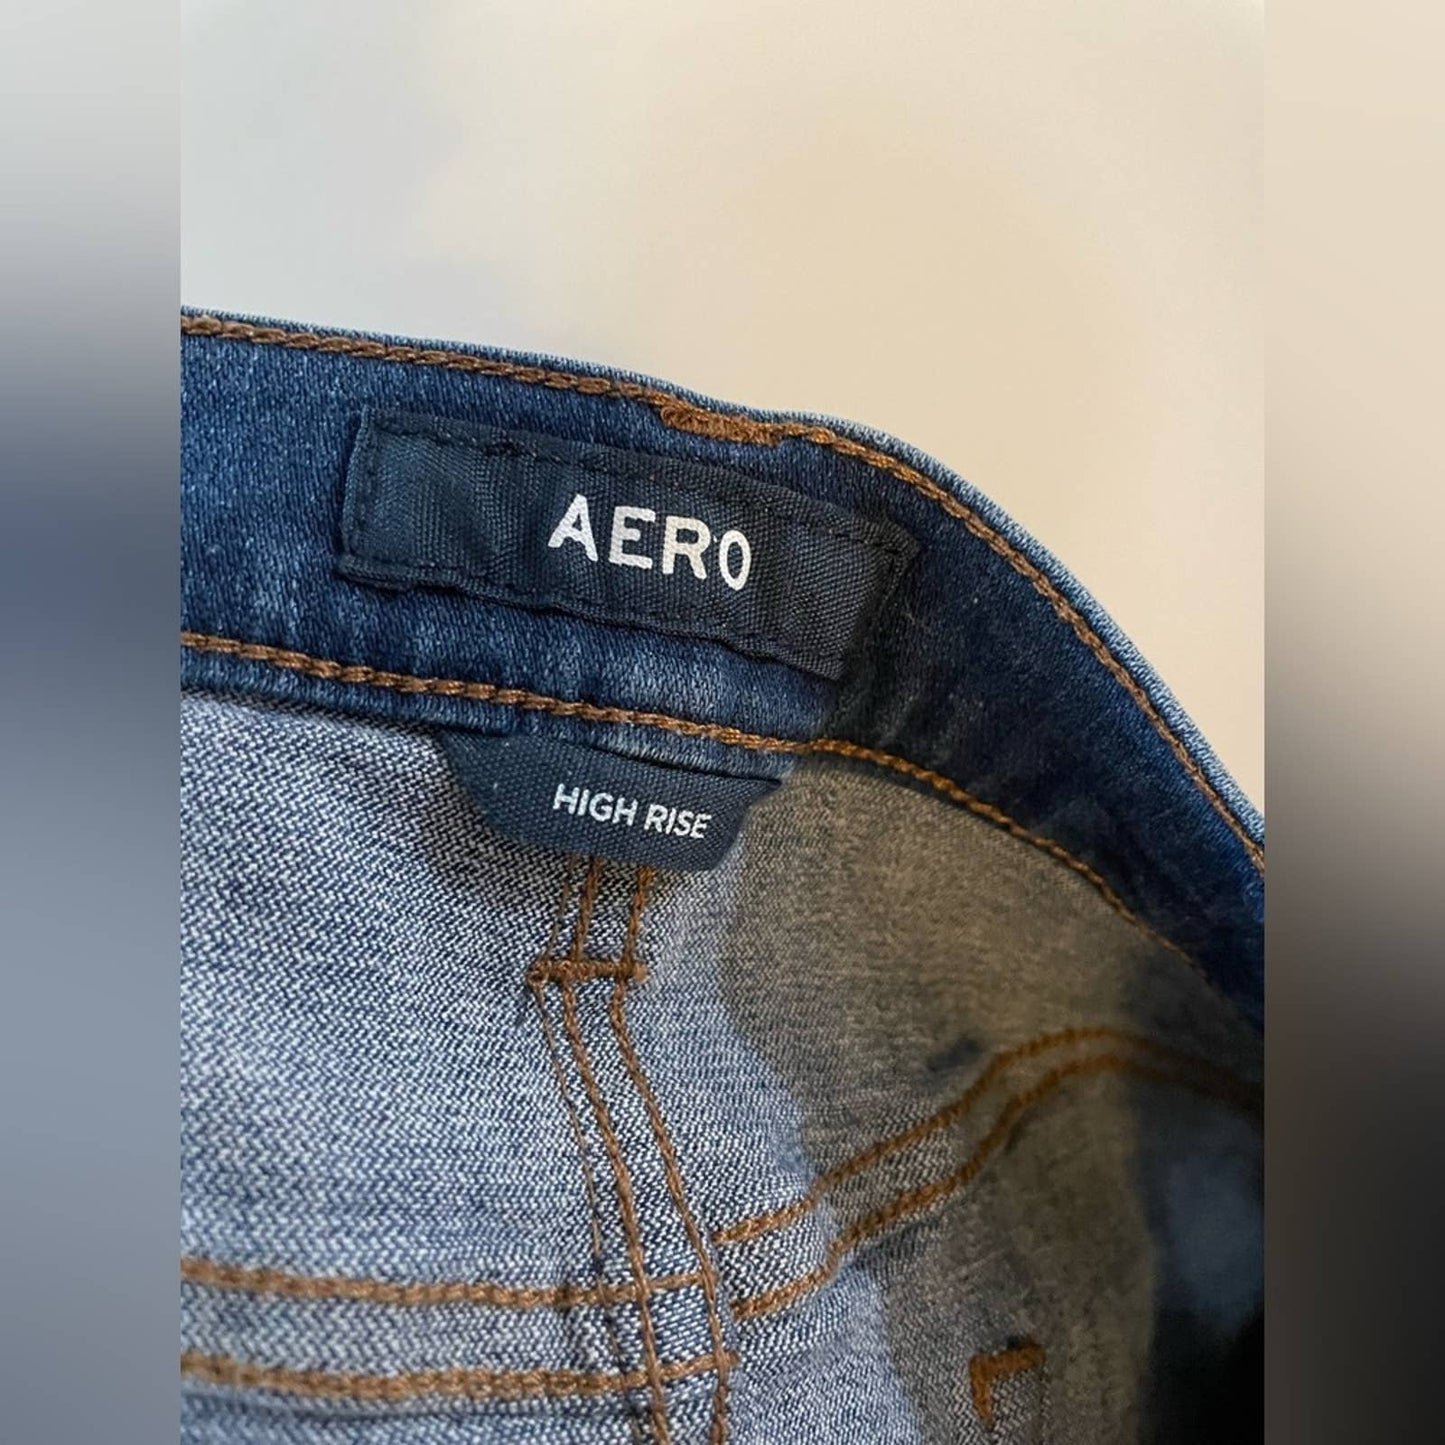 Size 8 Aeropostale Distressed Jean Skirt